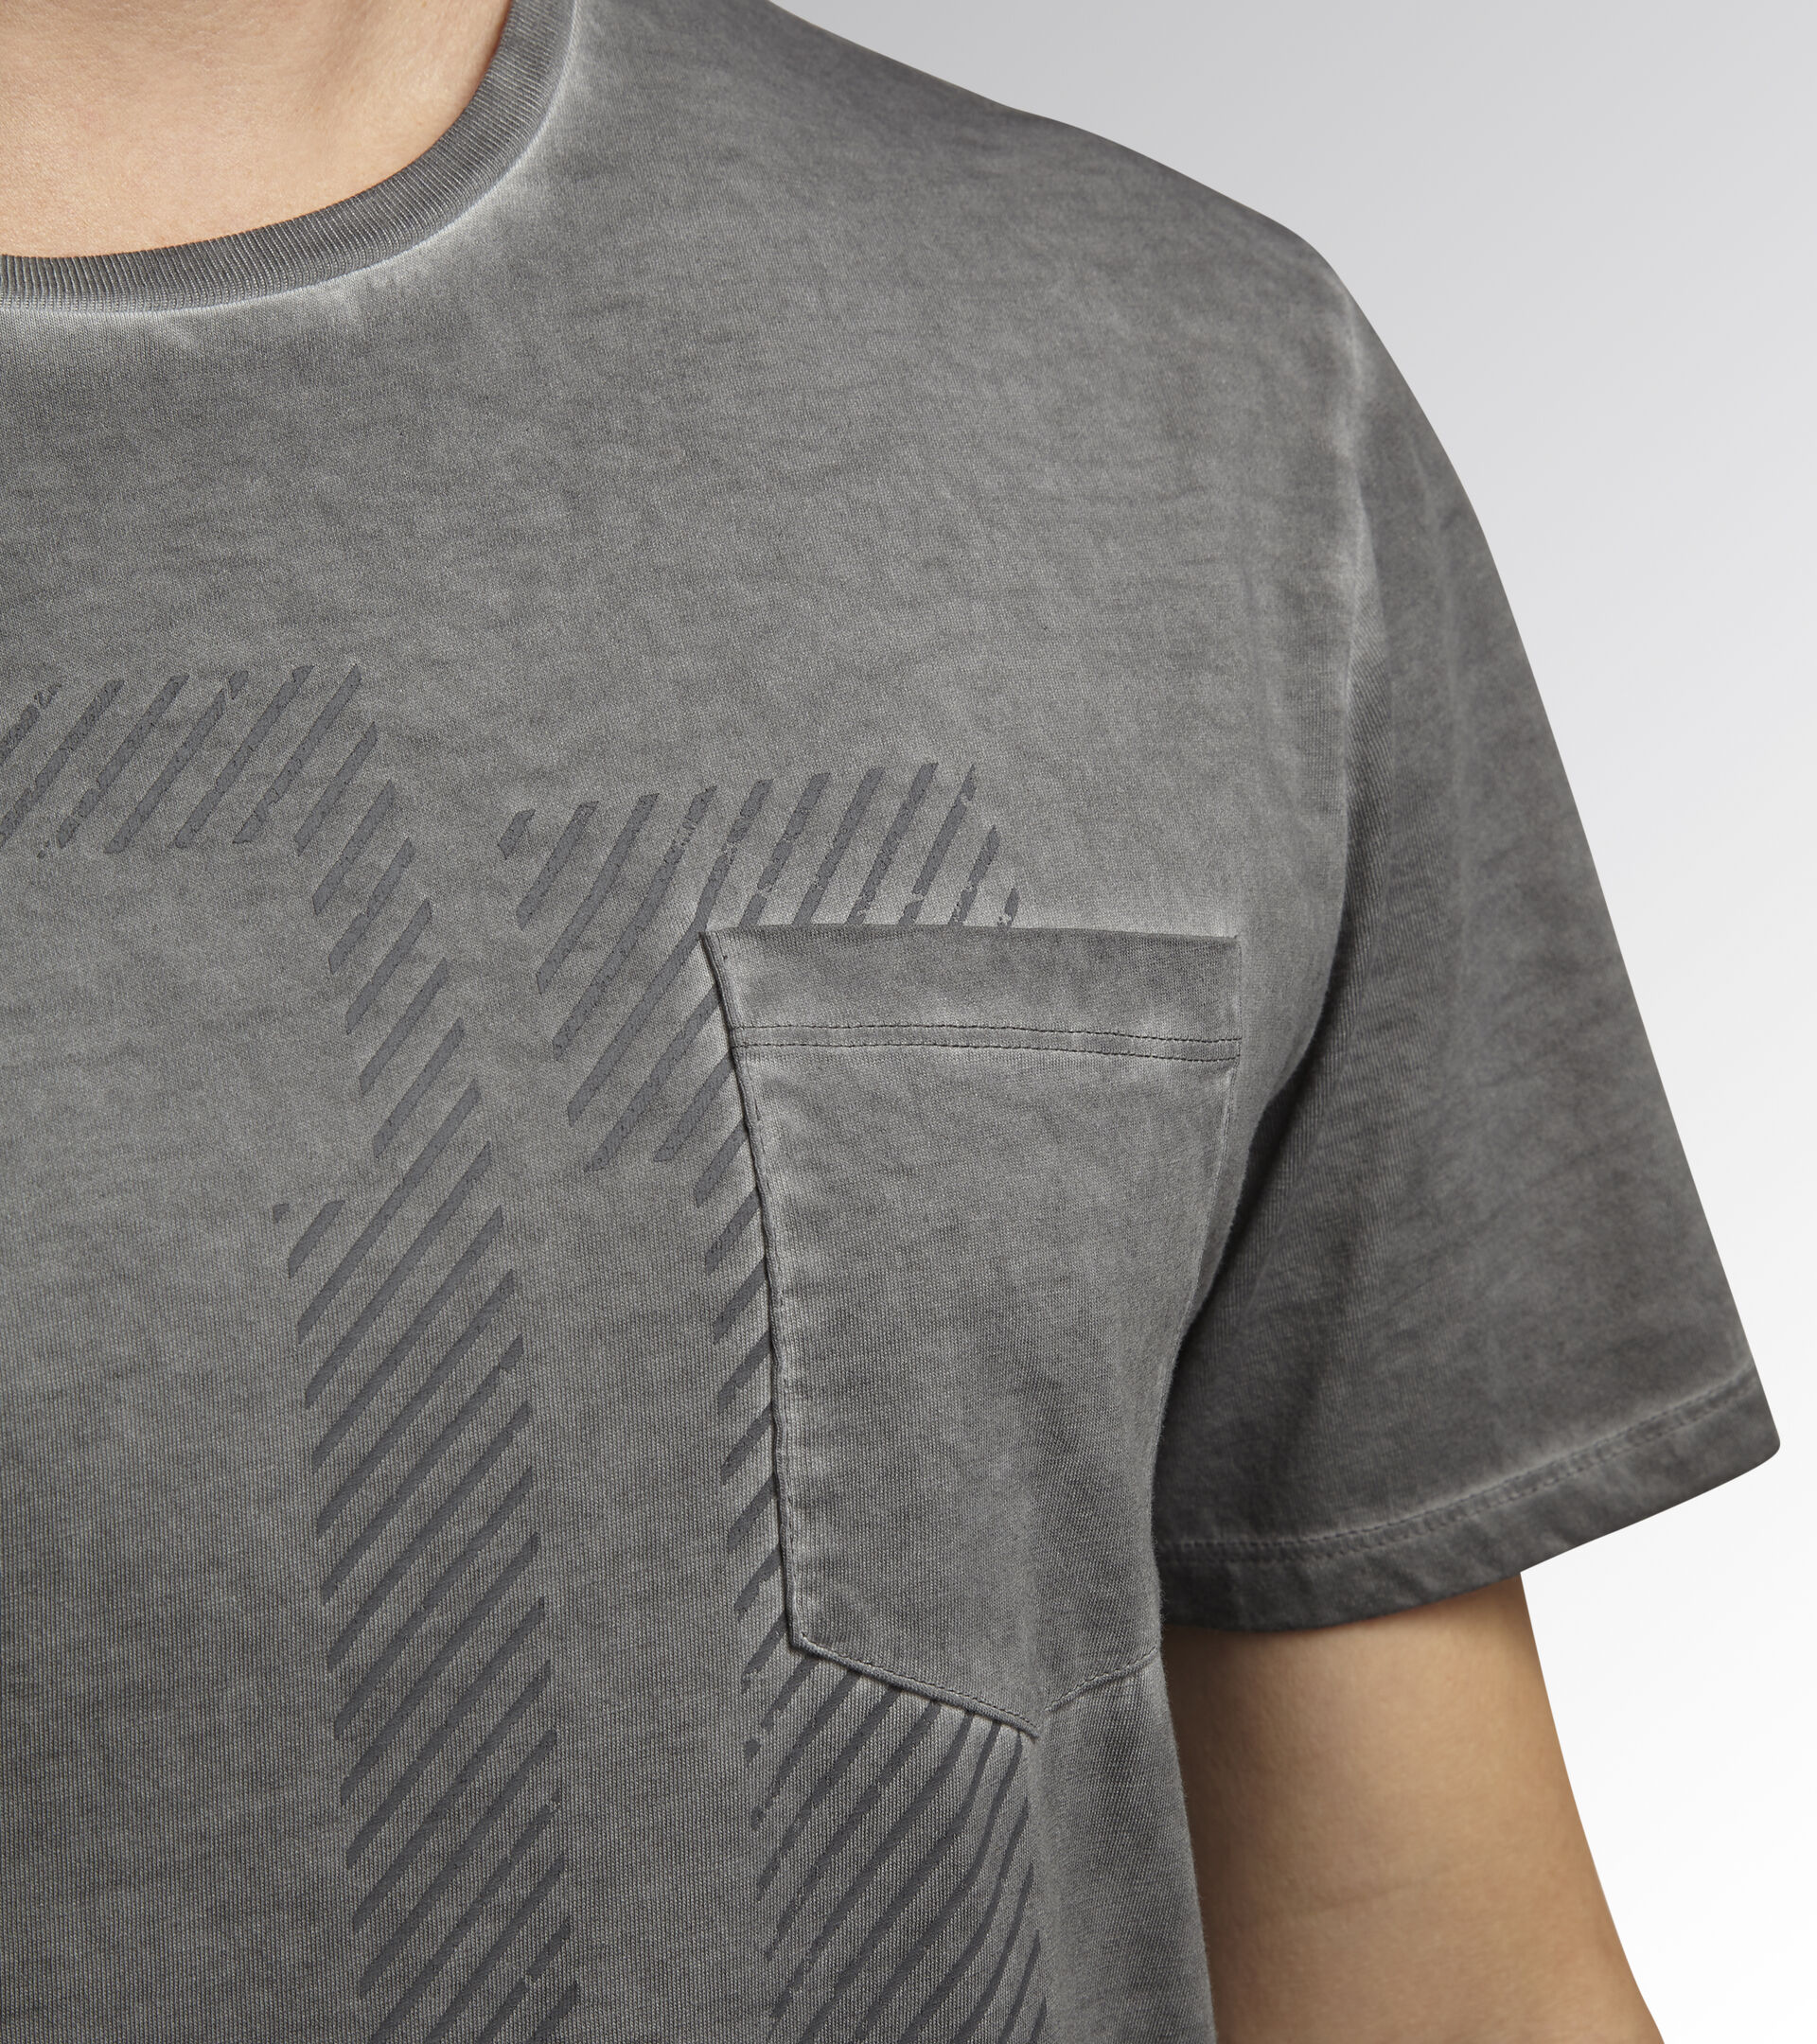 Short-sleeved work T-shirt T-SHIRT URBAN GREY QUIET SHADE - Utility